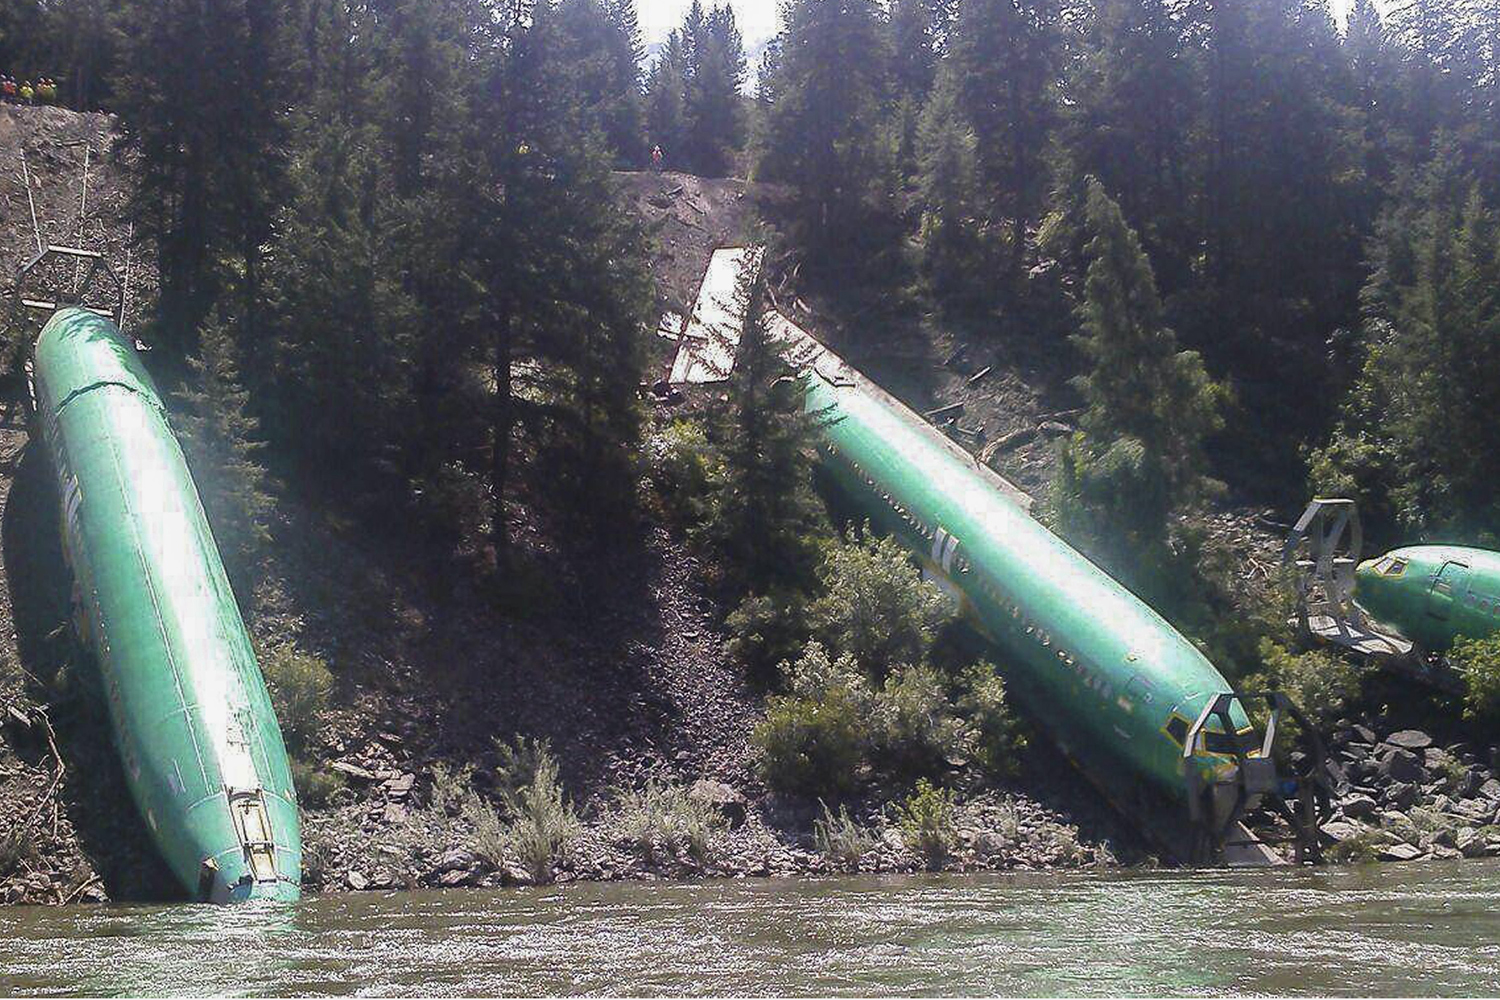 Train derails dumping planes into river